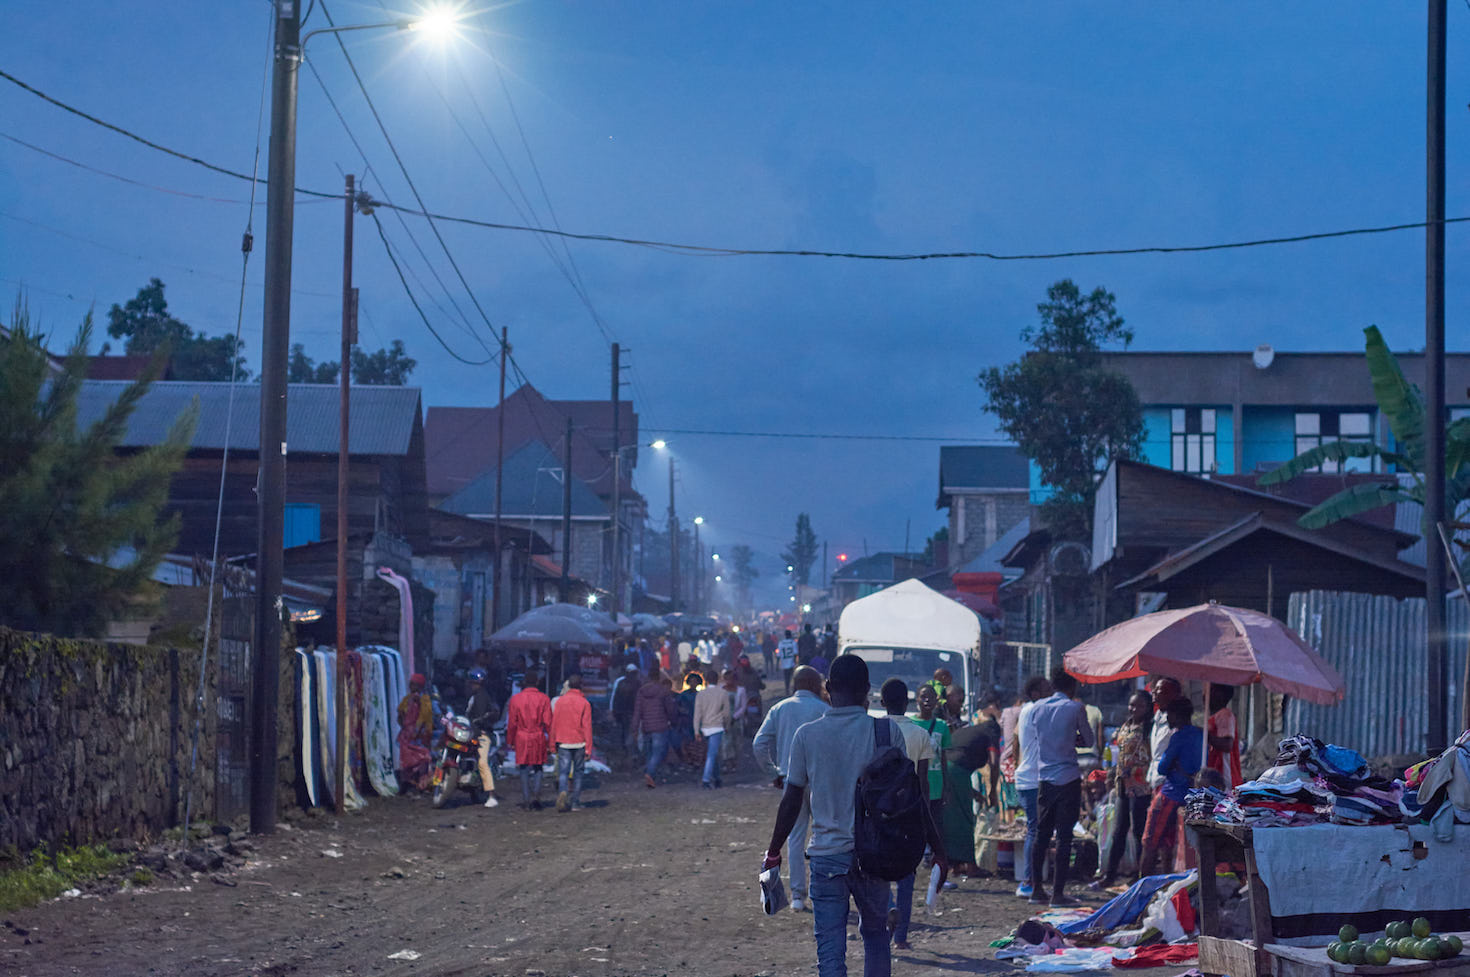 Public street lighting provided by Nuru in a peri-urban community near Goma, Democratic Republic of Congo. Photo by Makaveli Sikuli.